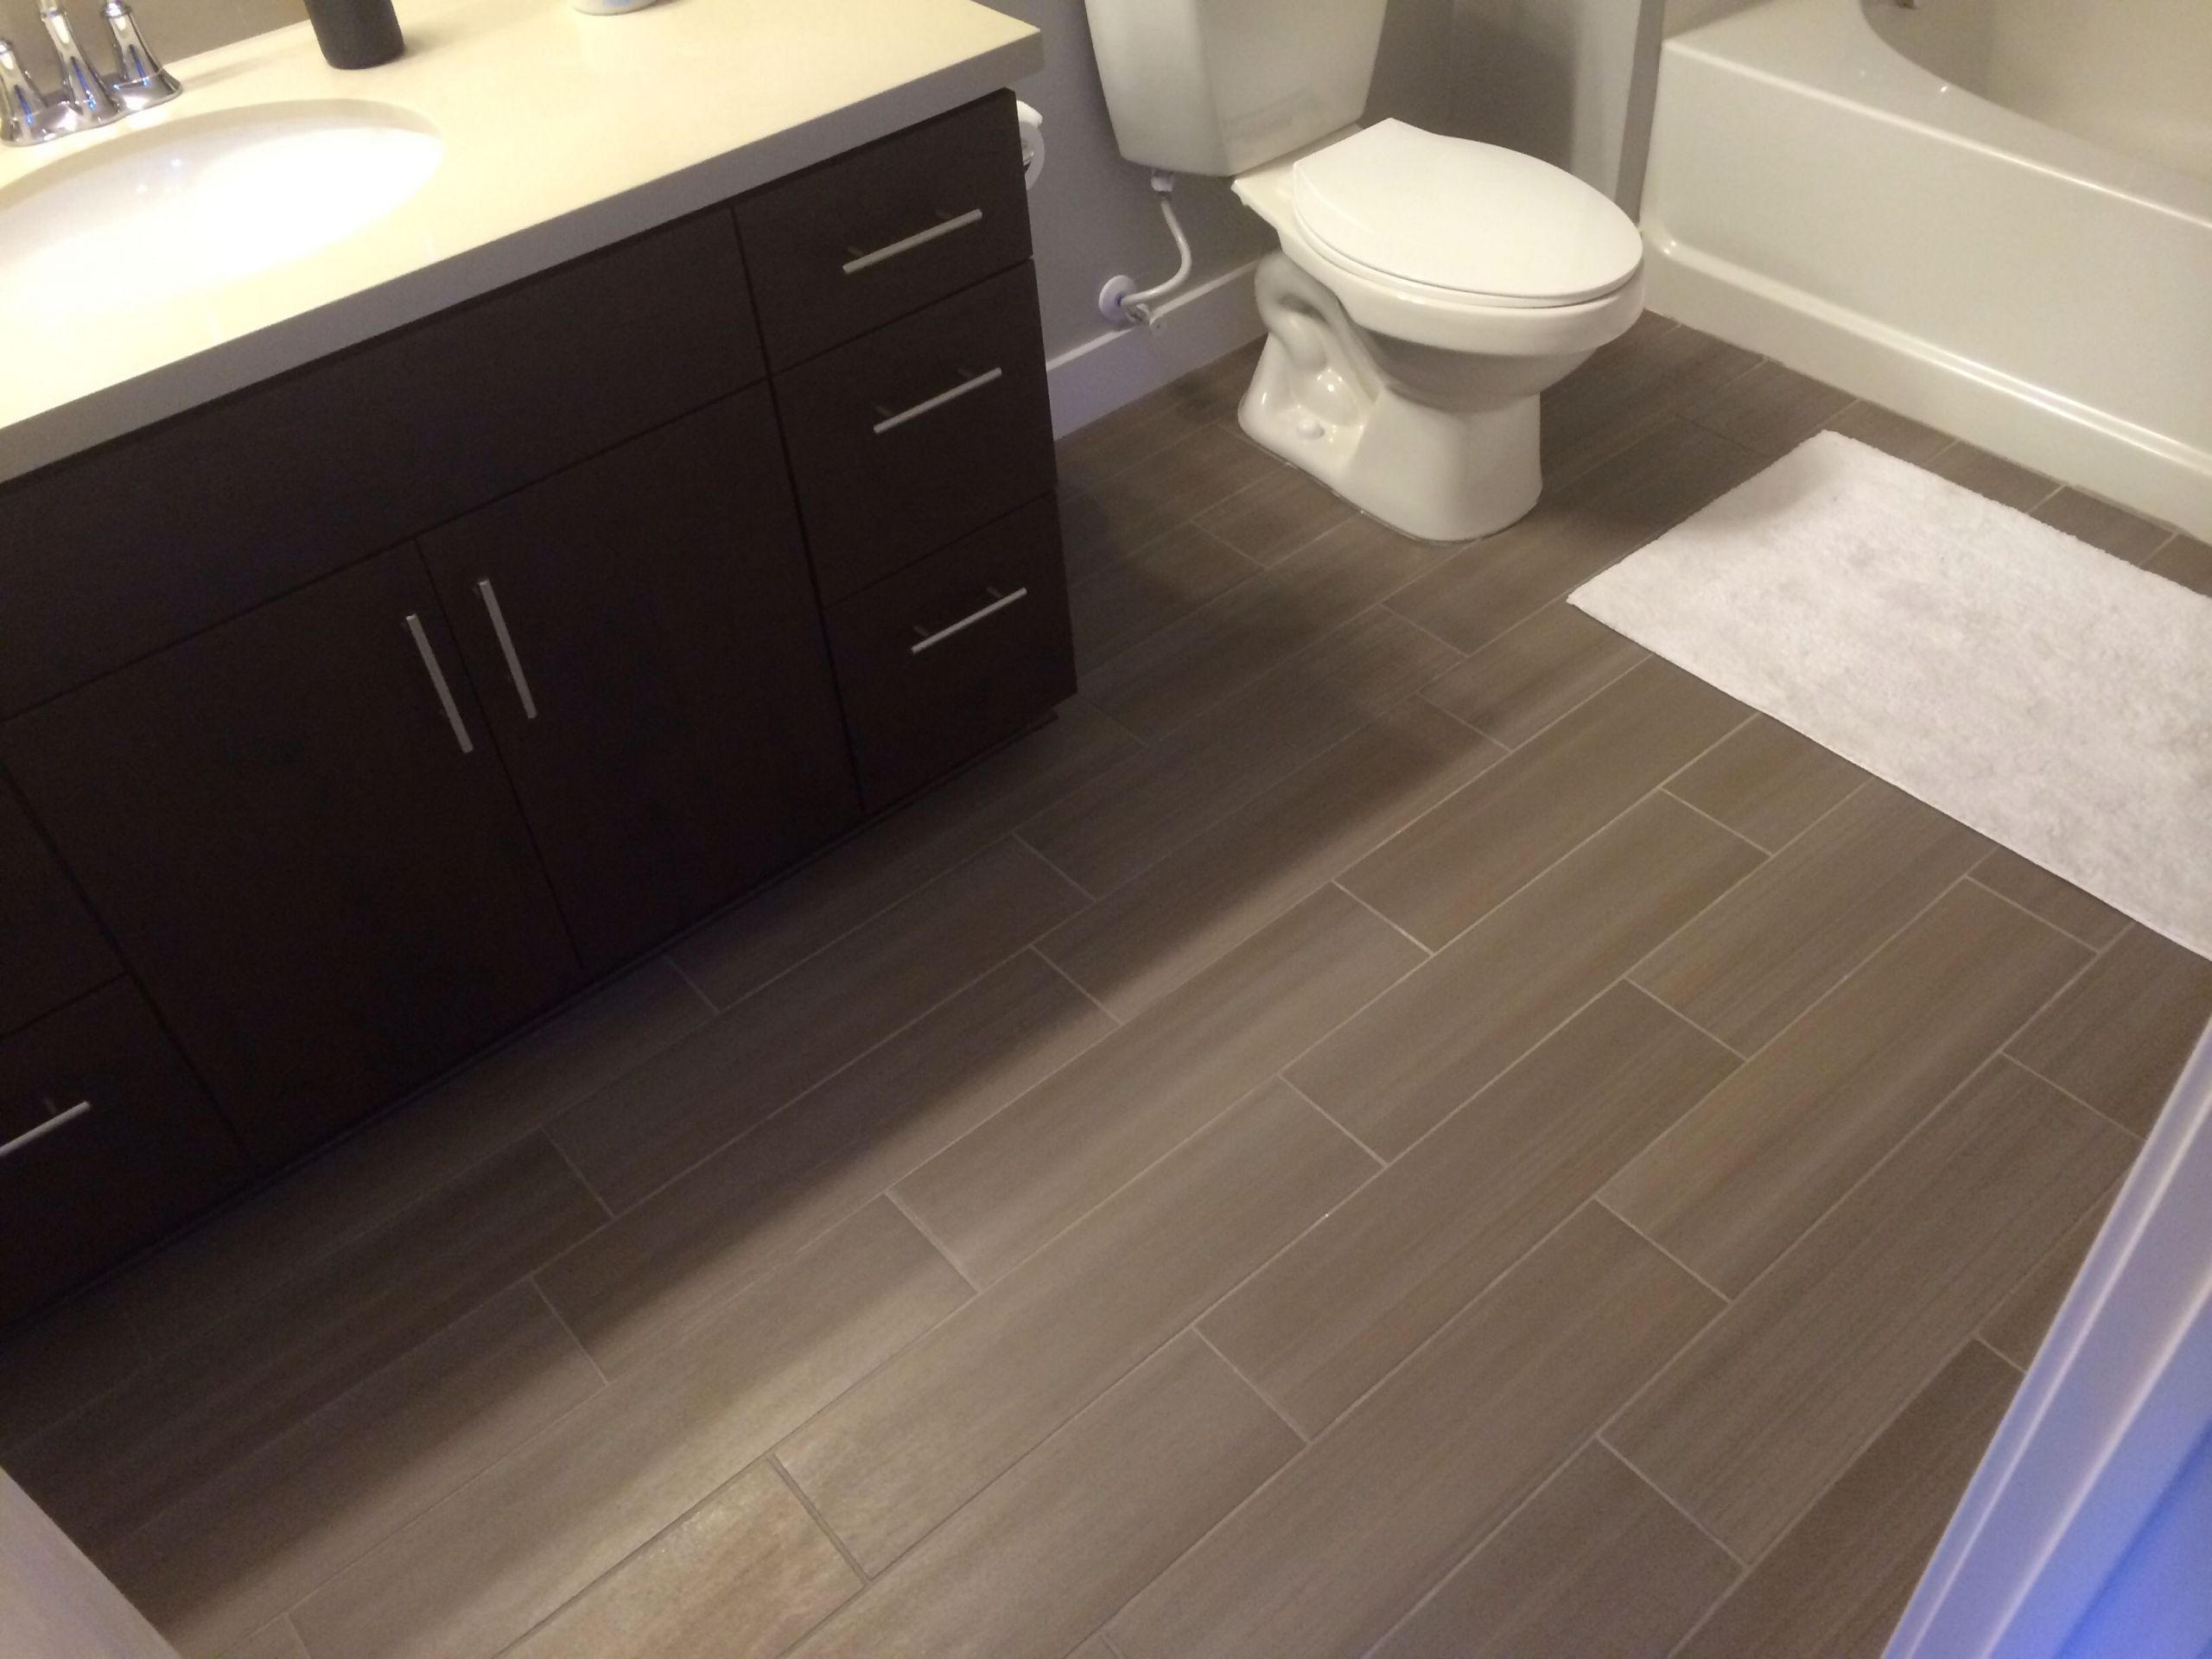 Tiles For Small Bathroom Floor
 Best 25 Bathroom flooring ideas on Pinterest